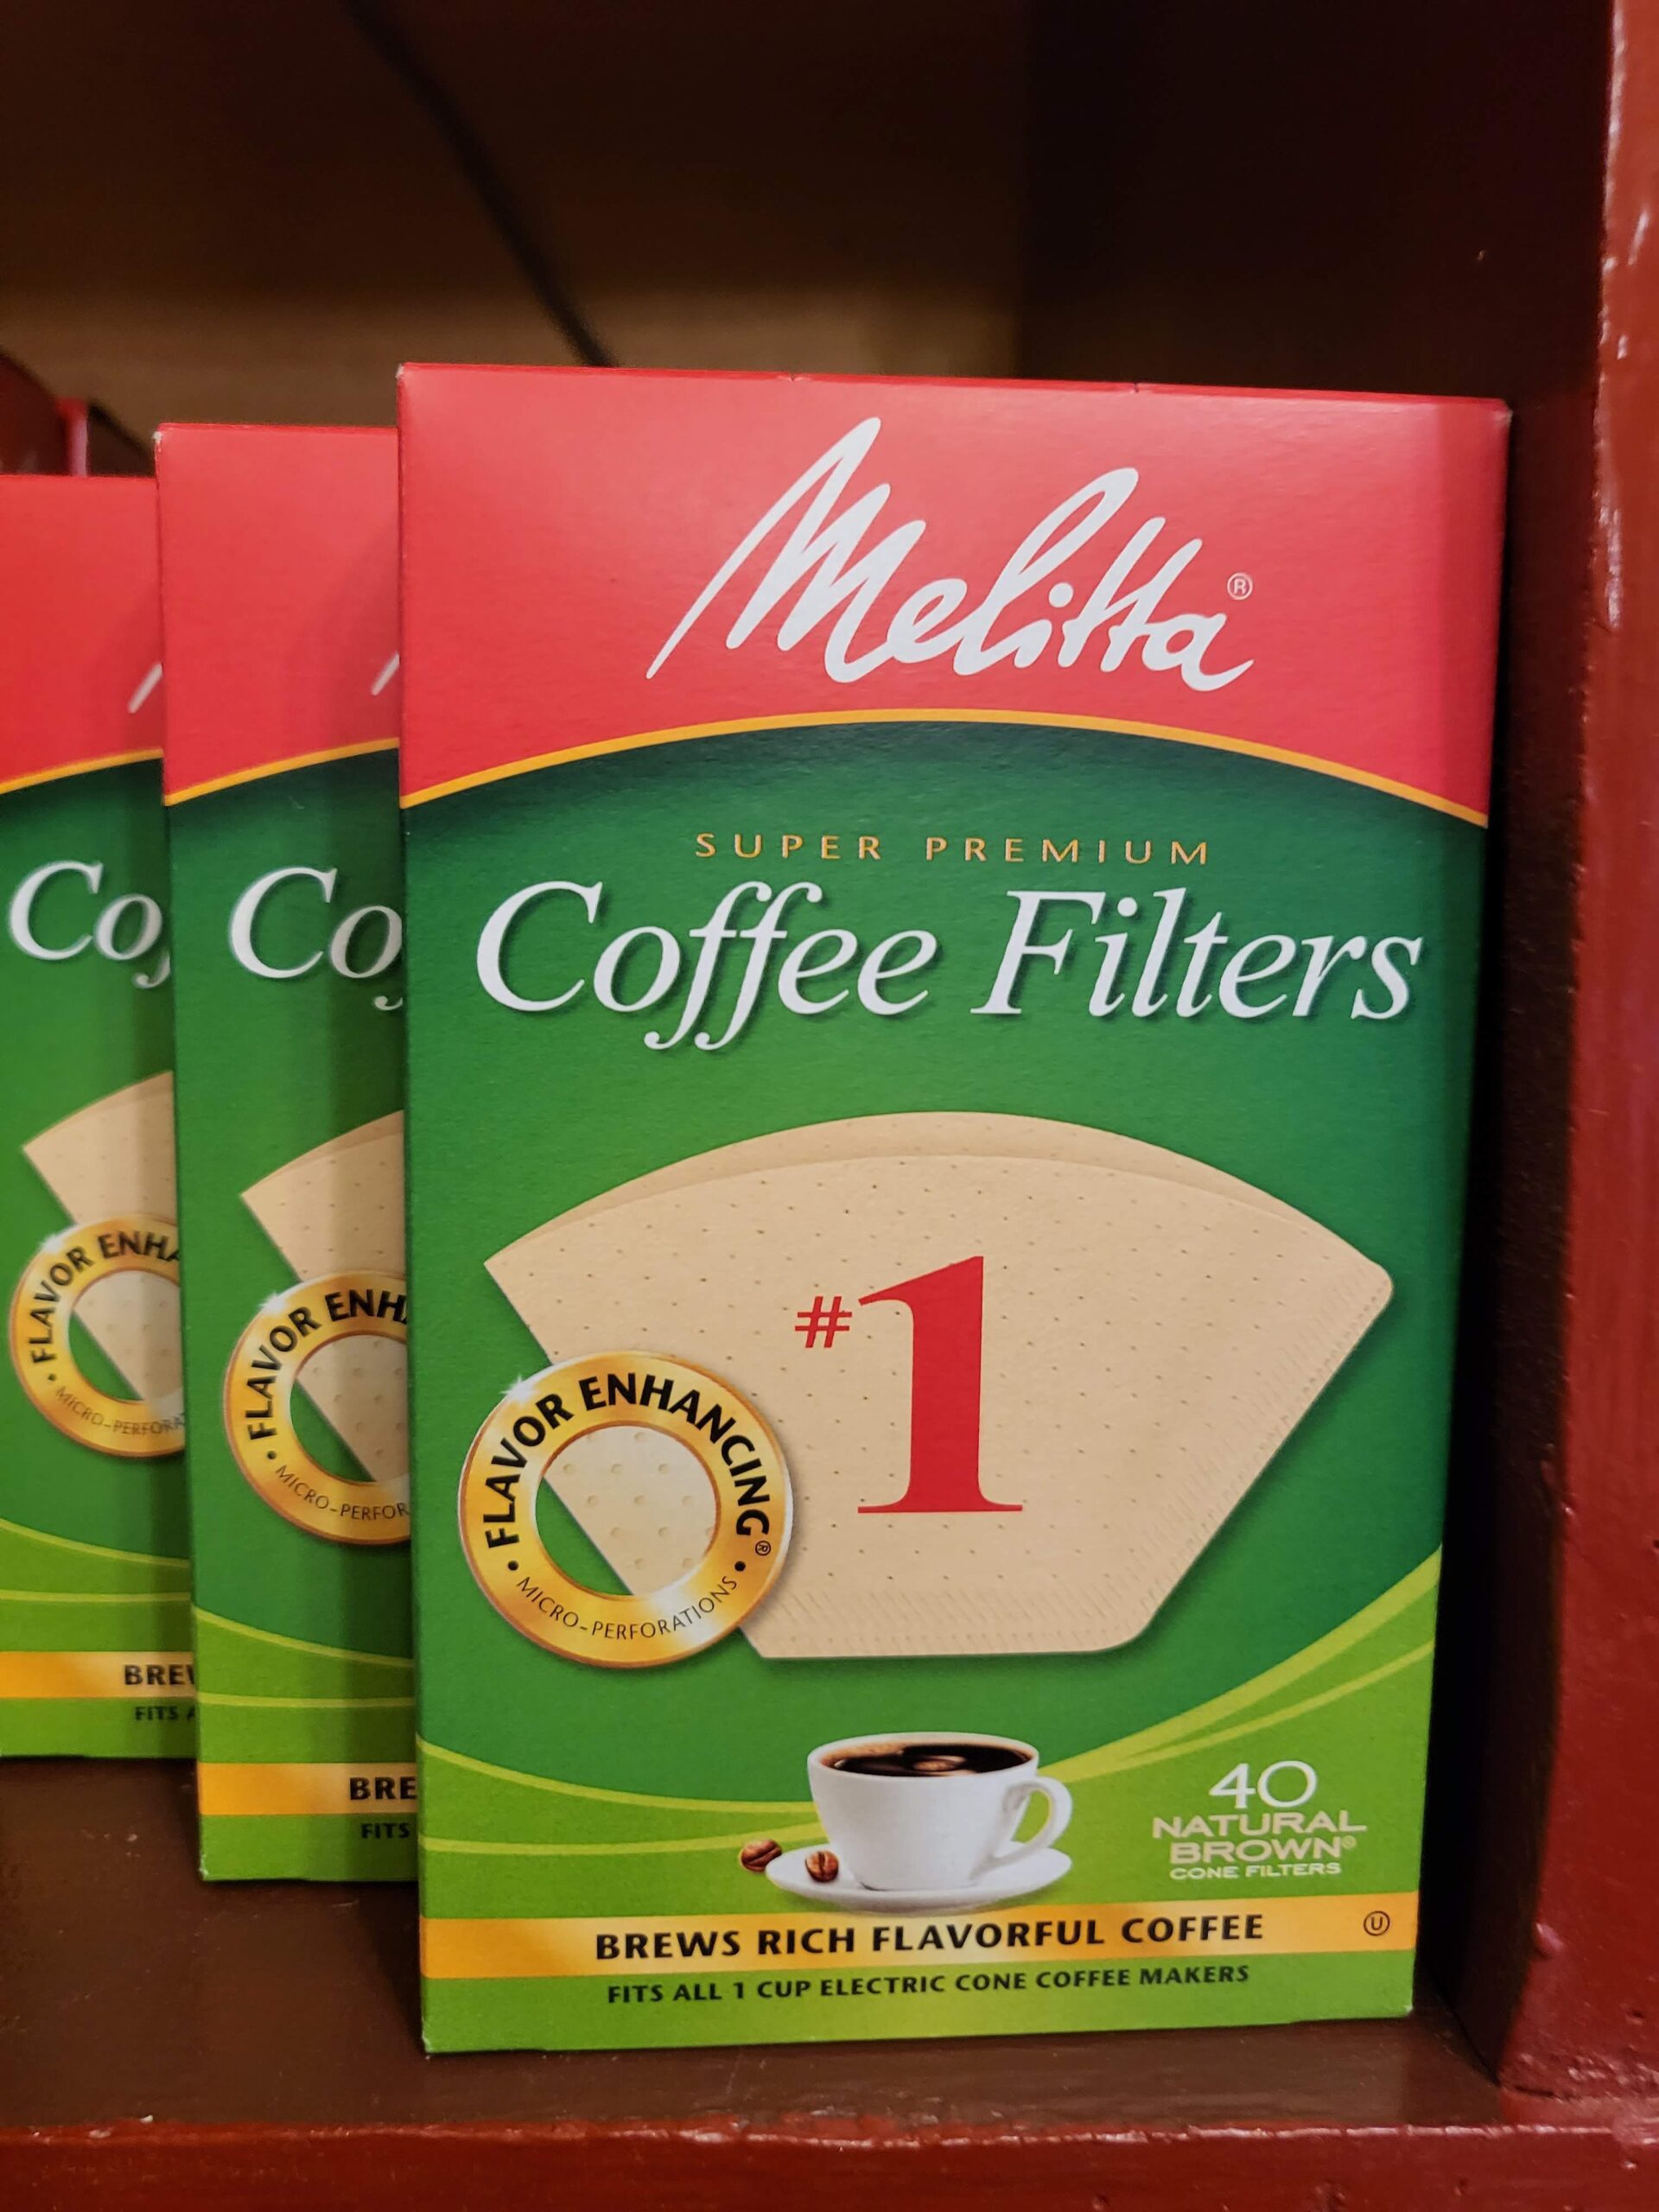 Melitta Coffee Filters, No.2, Super Premium, Filters